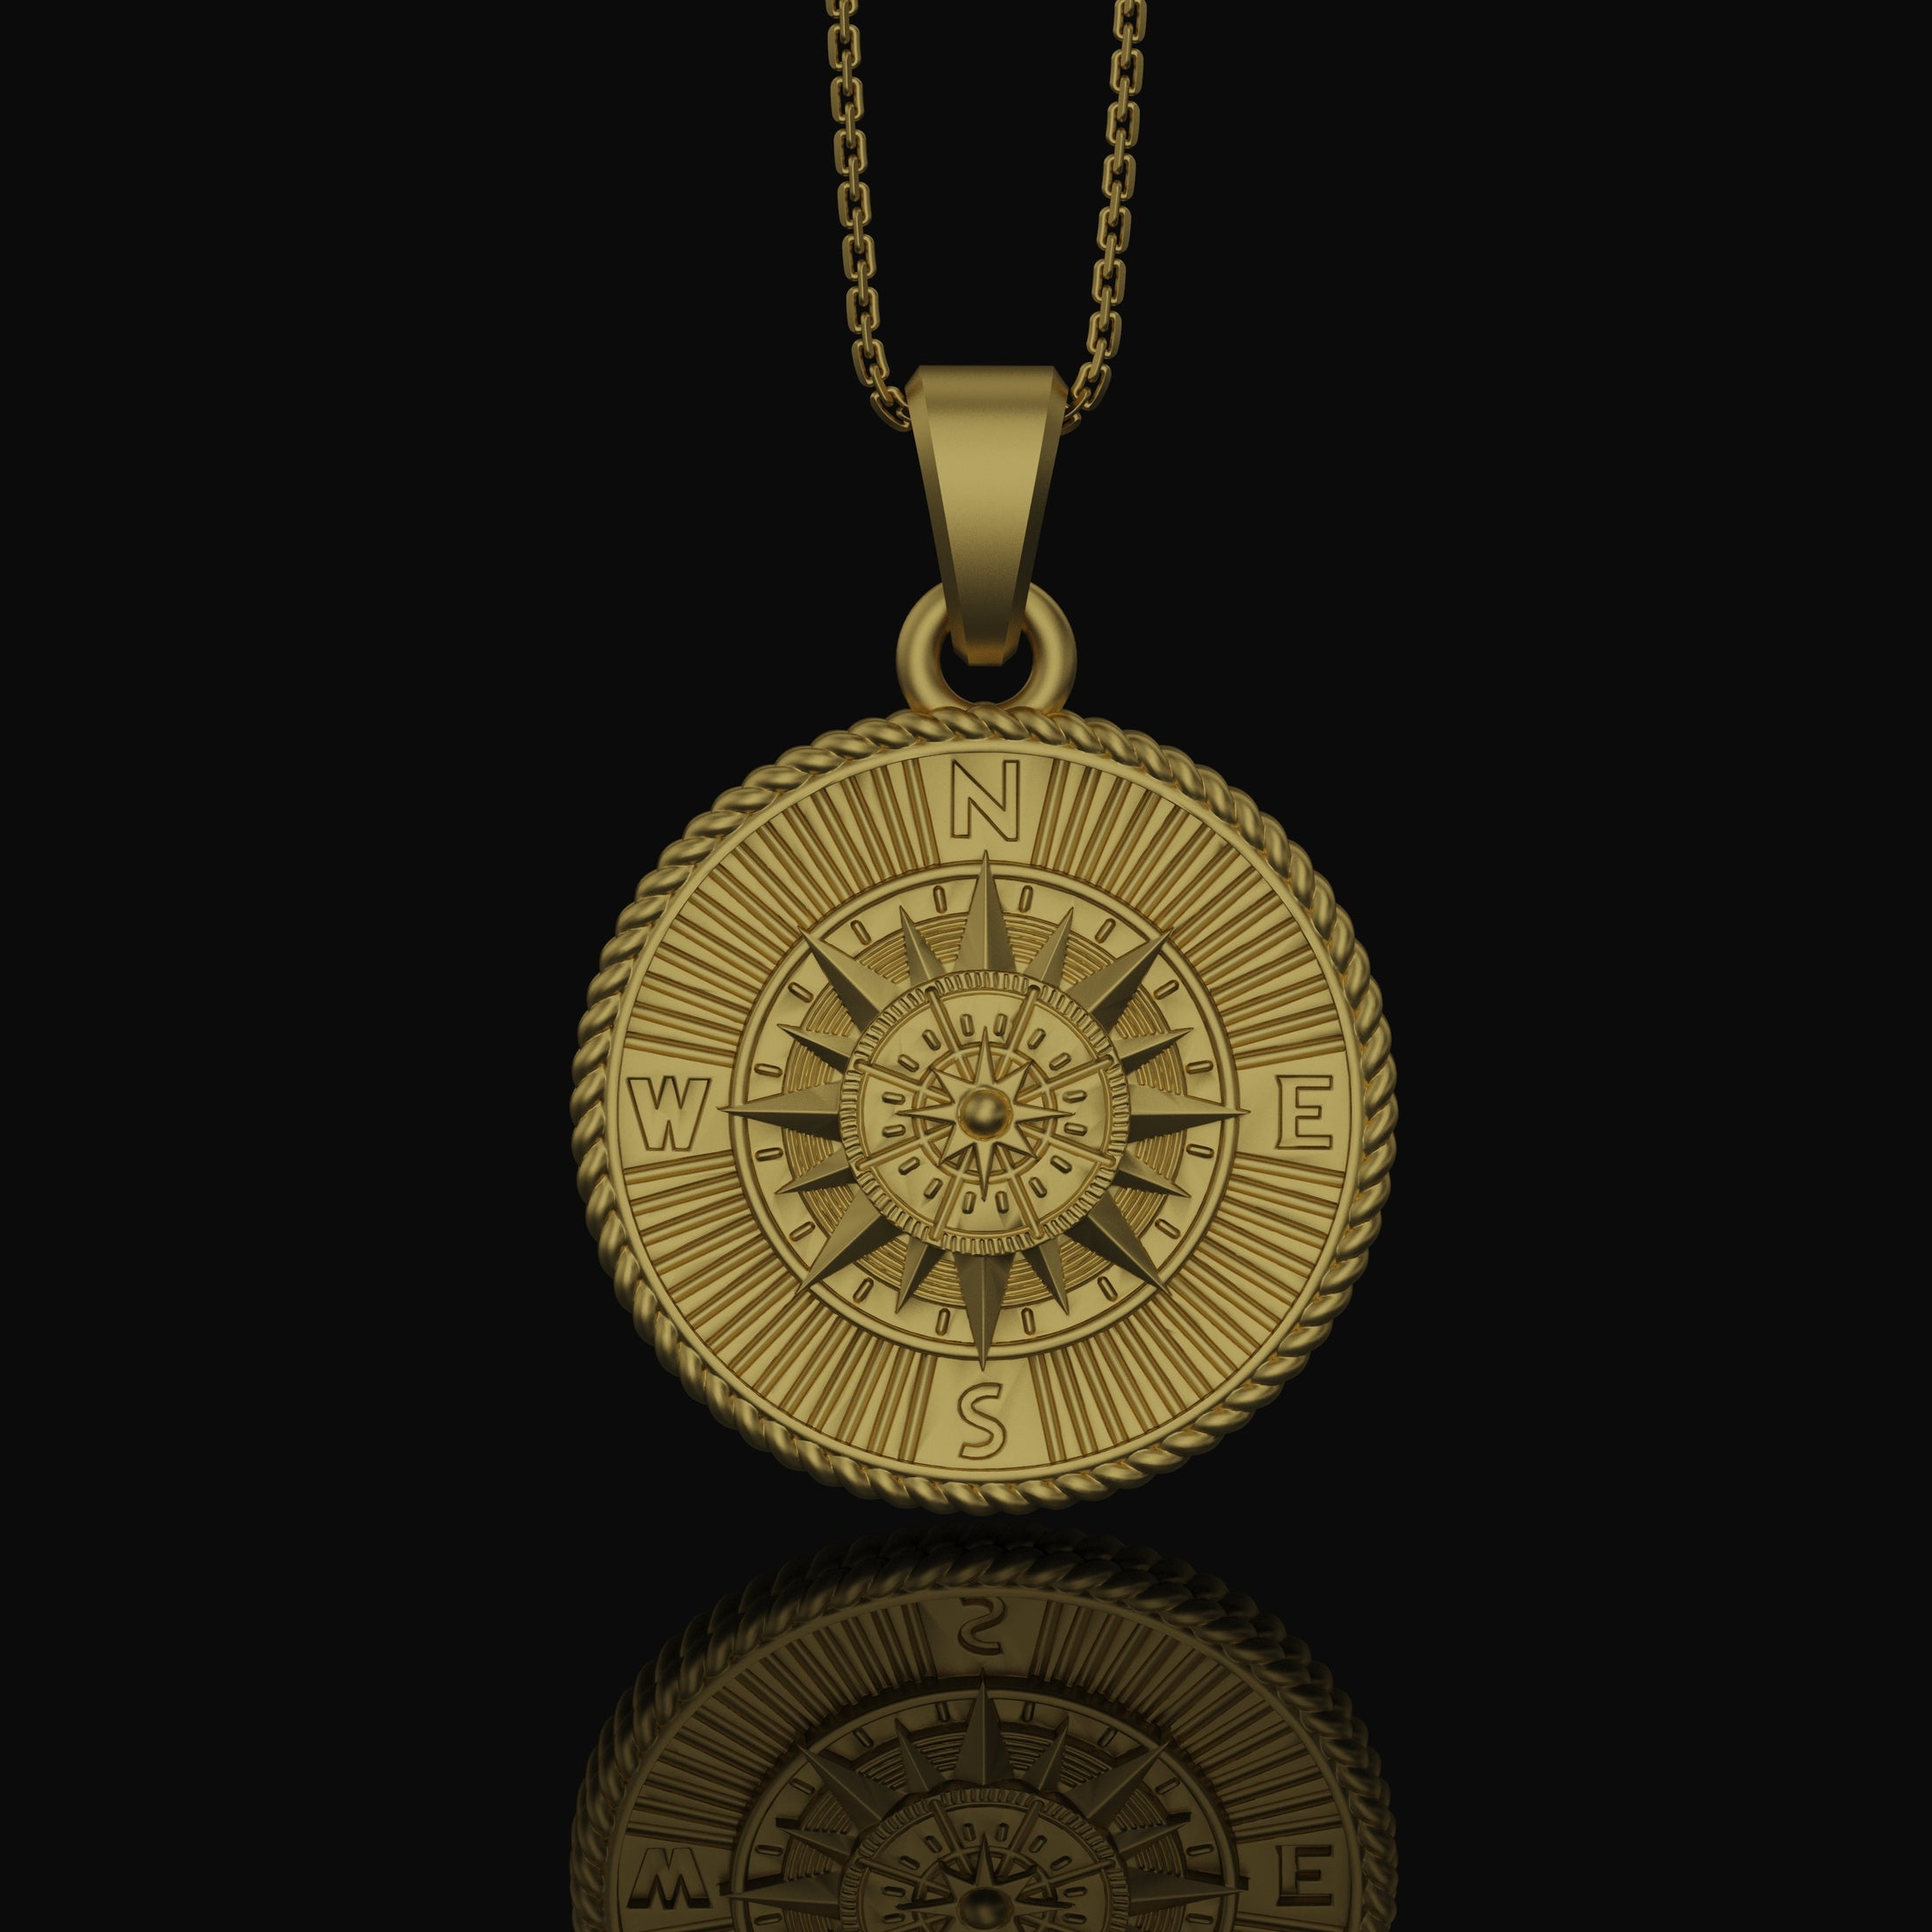 Silver Steampunk Compass Necklace - Vintage Explorer Pendant, Nautical Navigator Jewelry, Retro Mechanical Adventure Charm